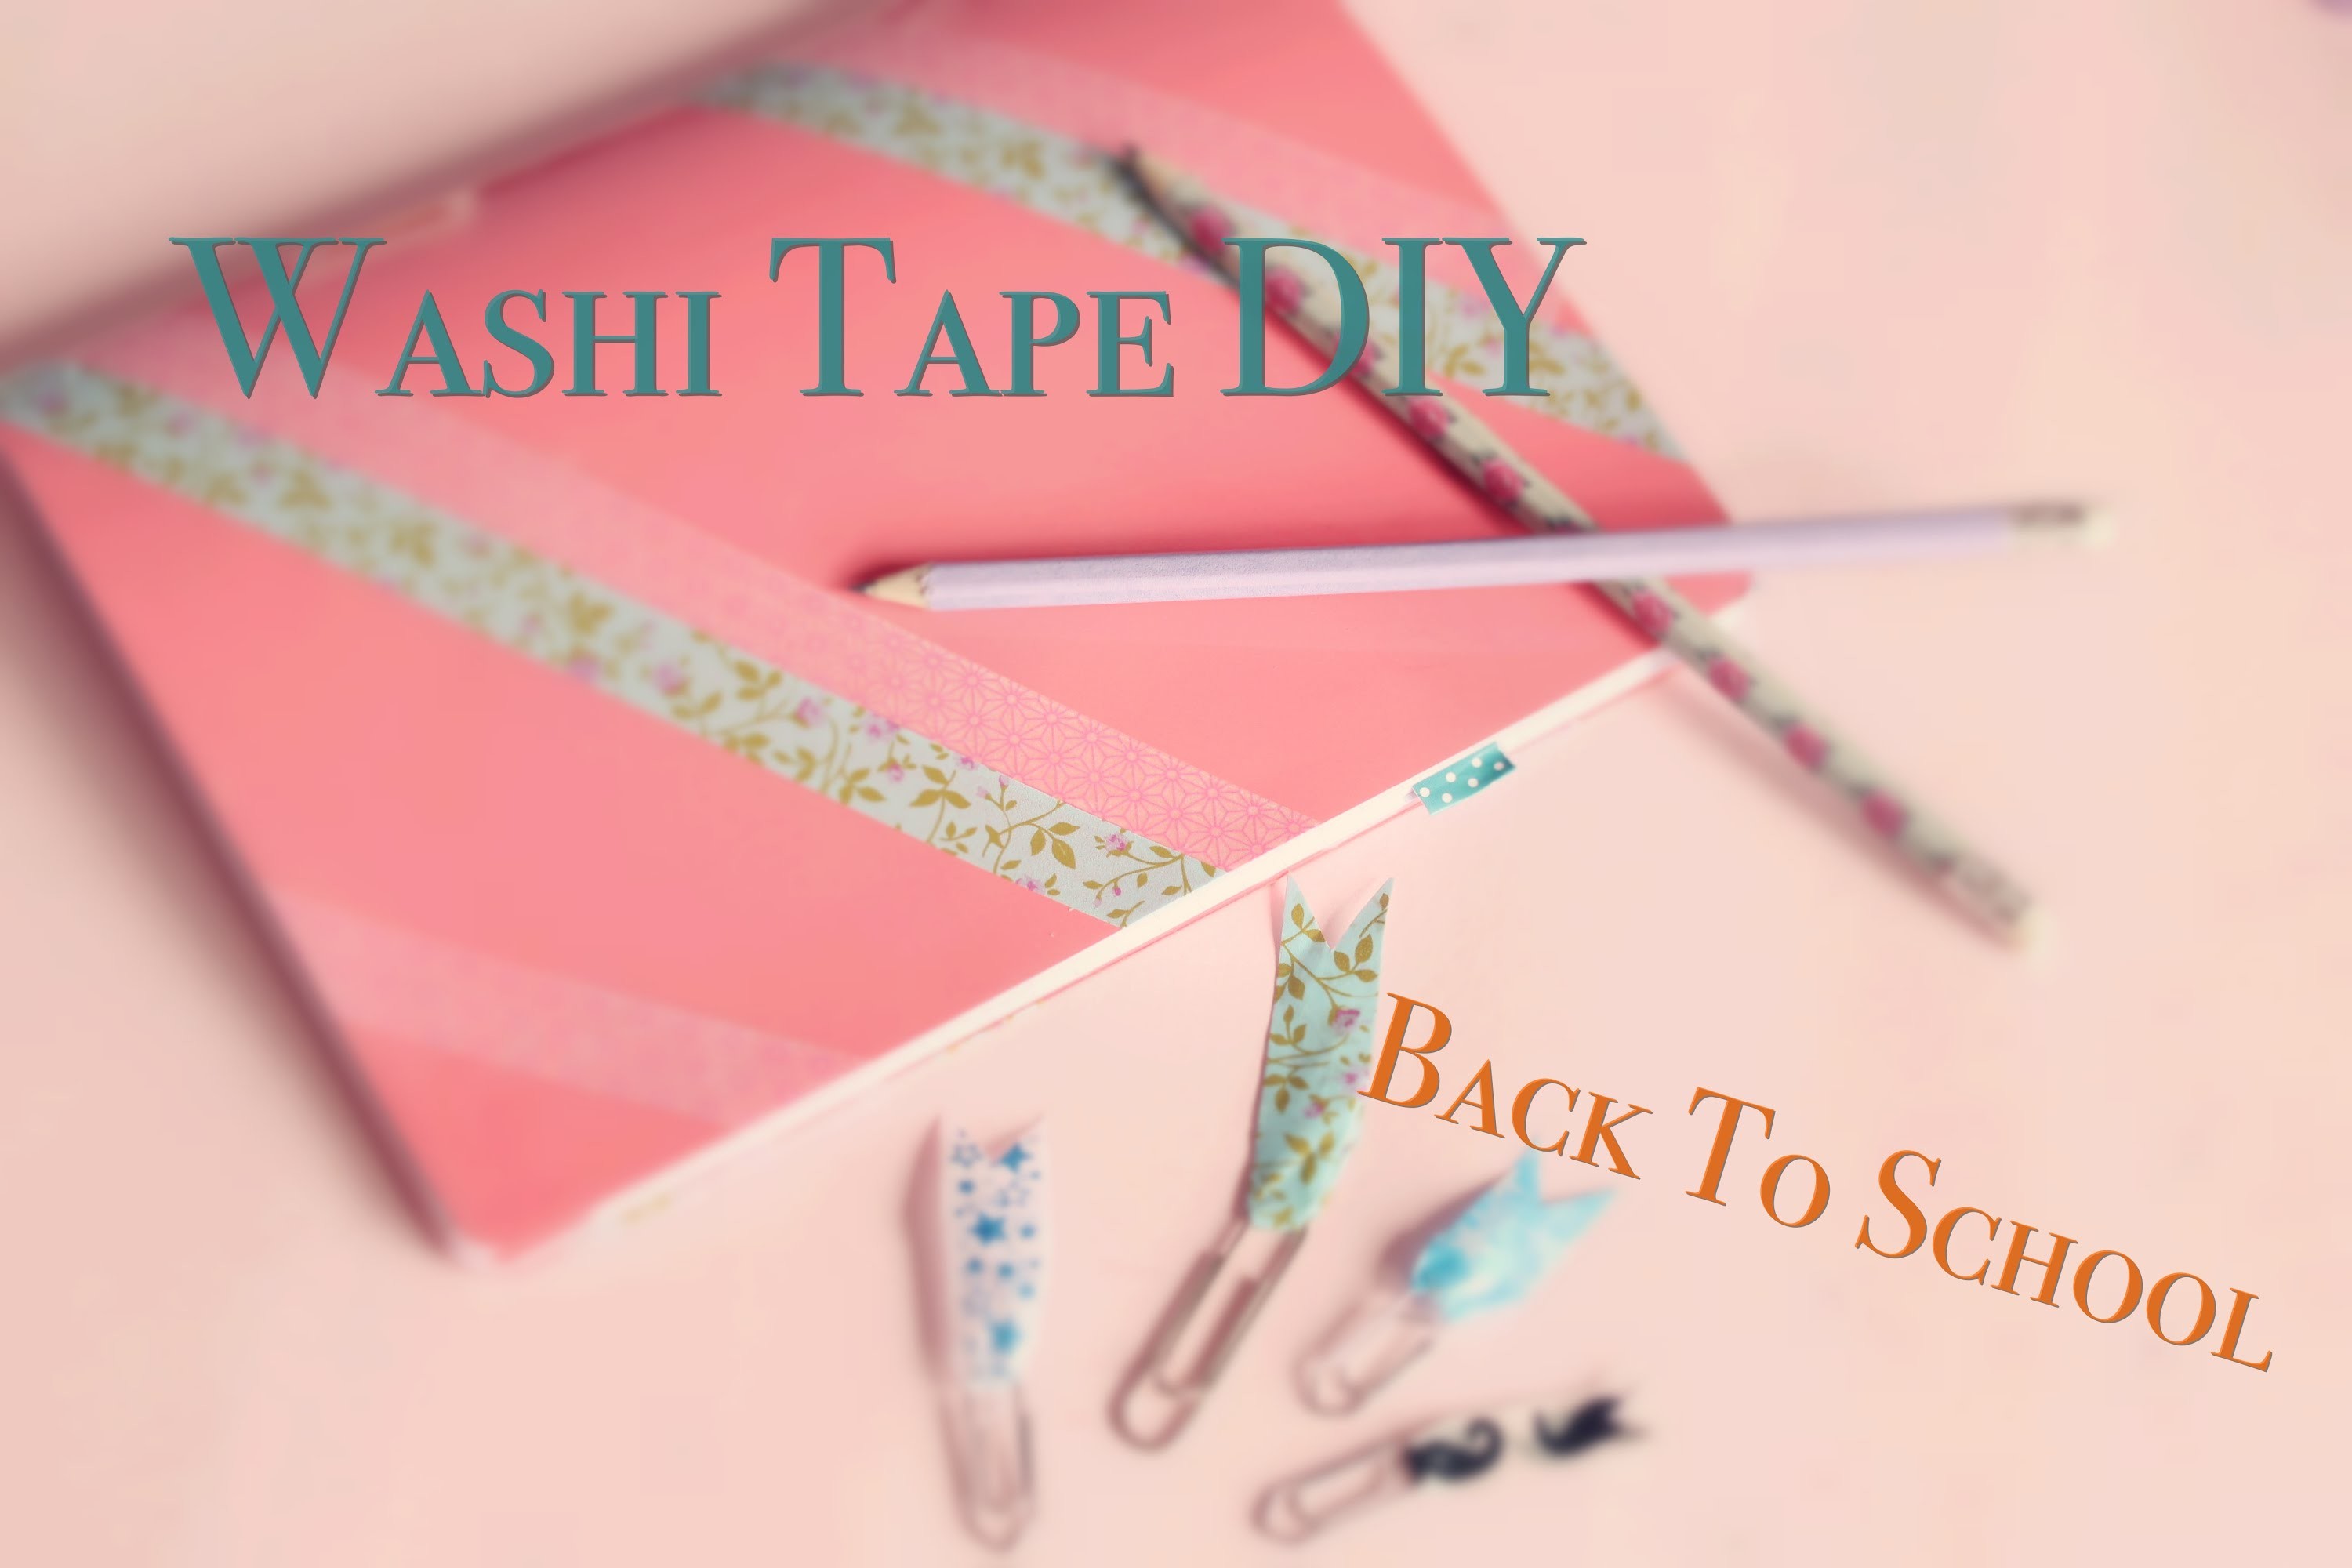 Washi Tape DIY - Back To School 2015!!